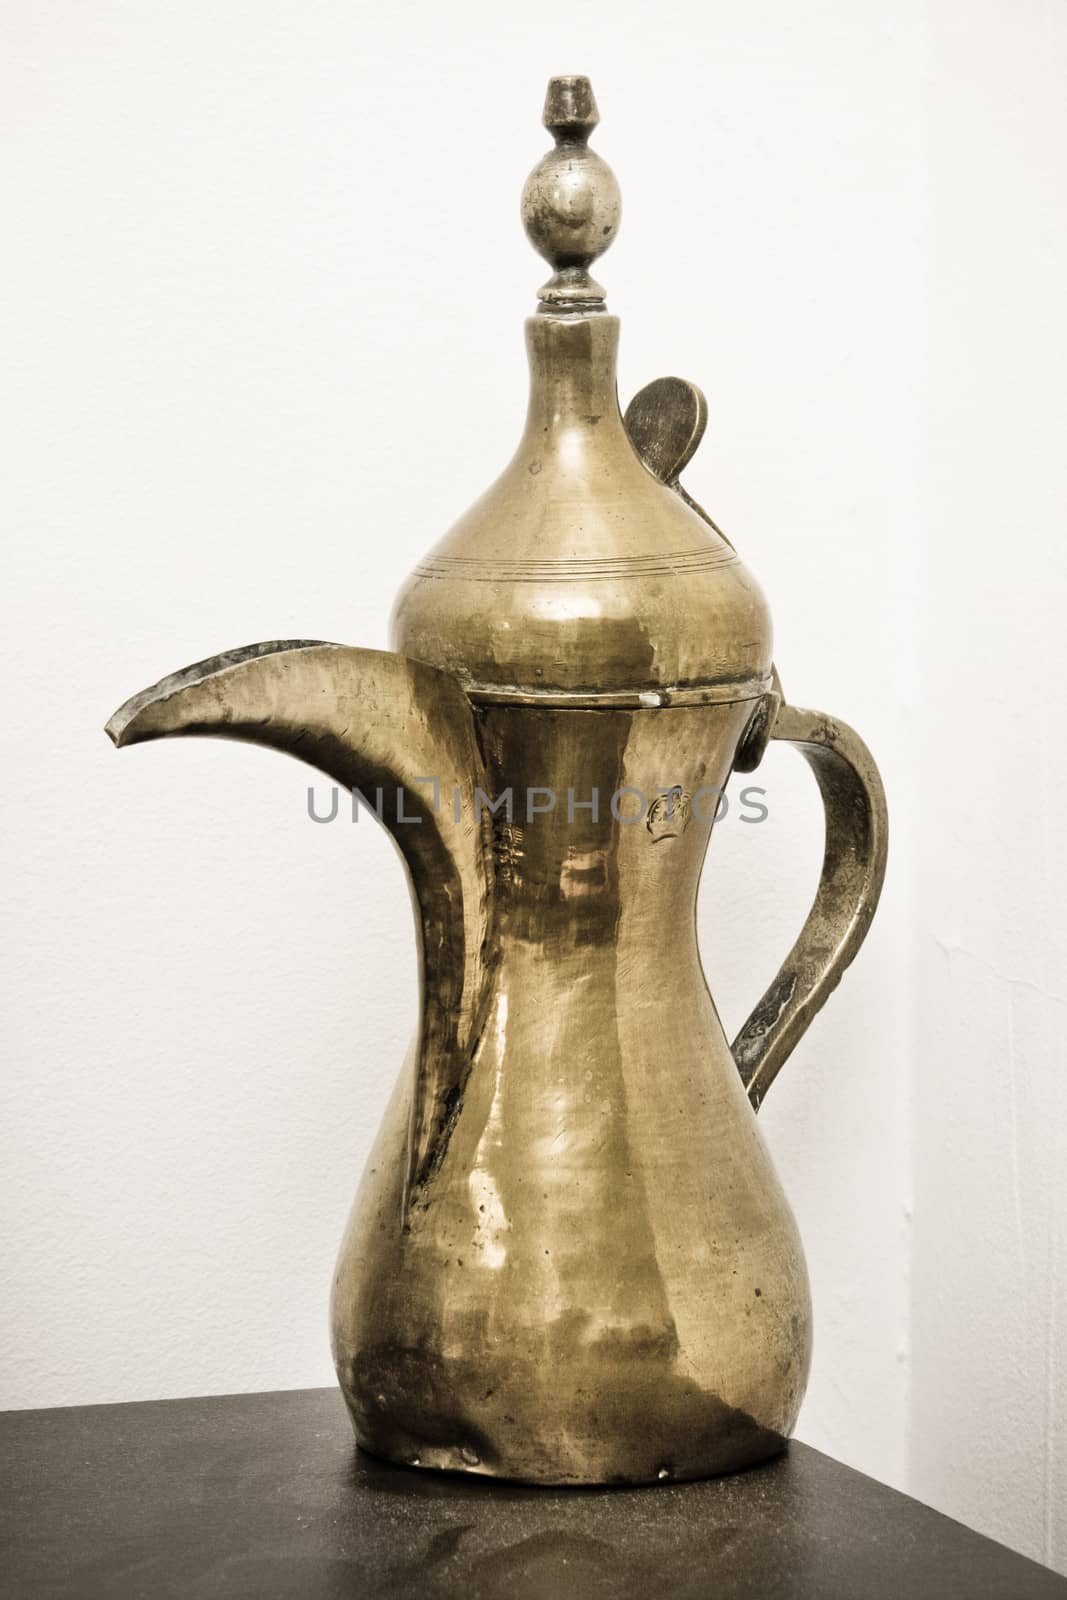 A traditional Omani brass coffee pot on a shelf